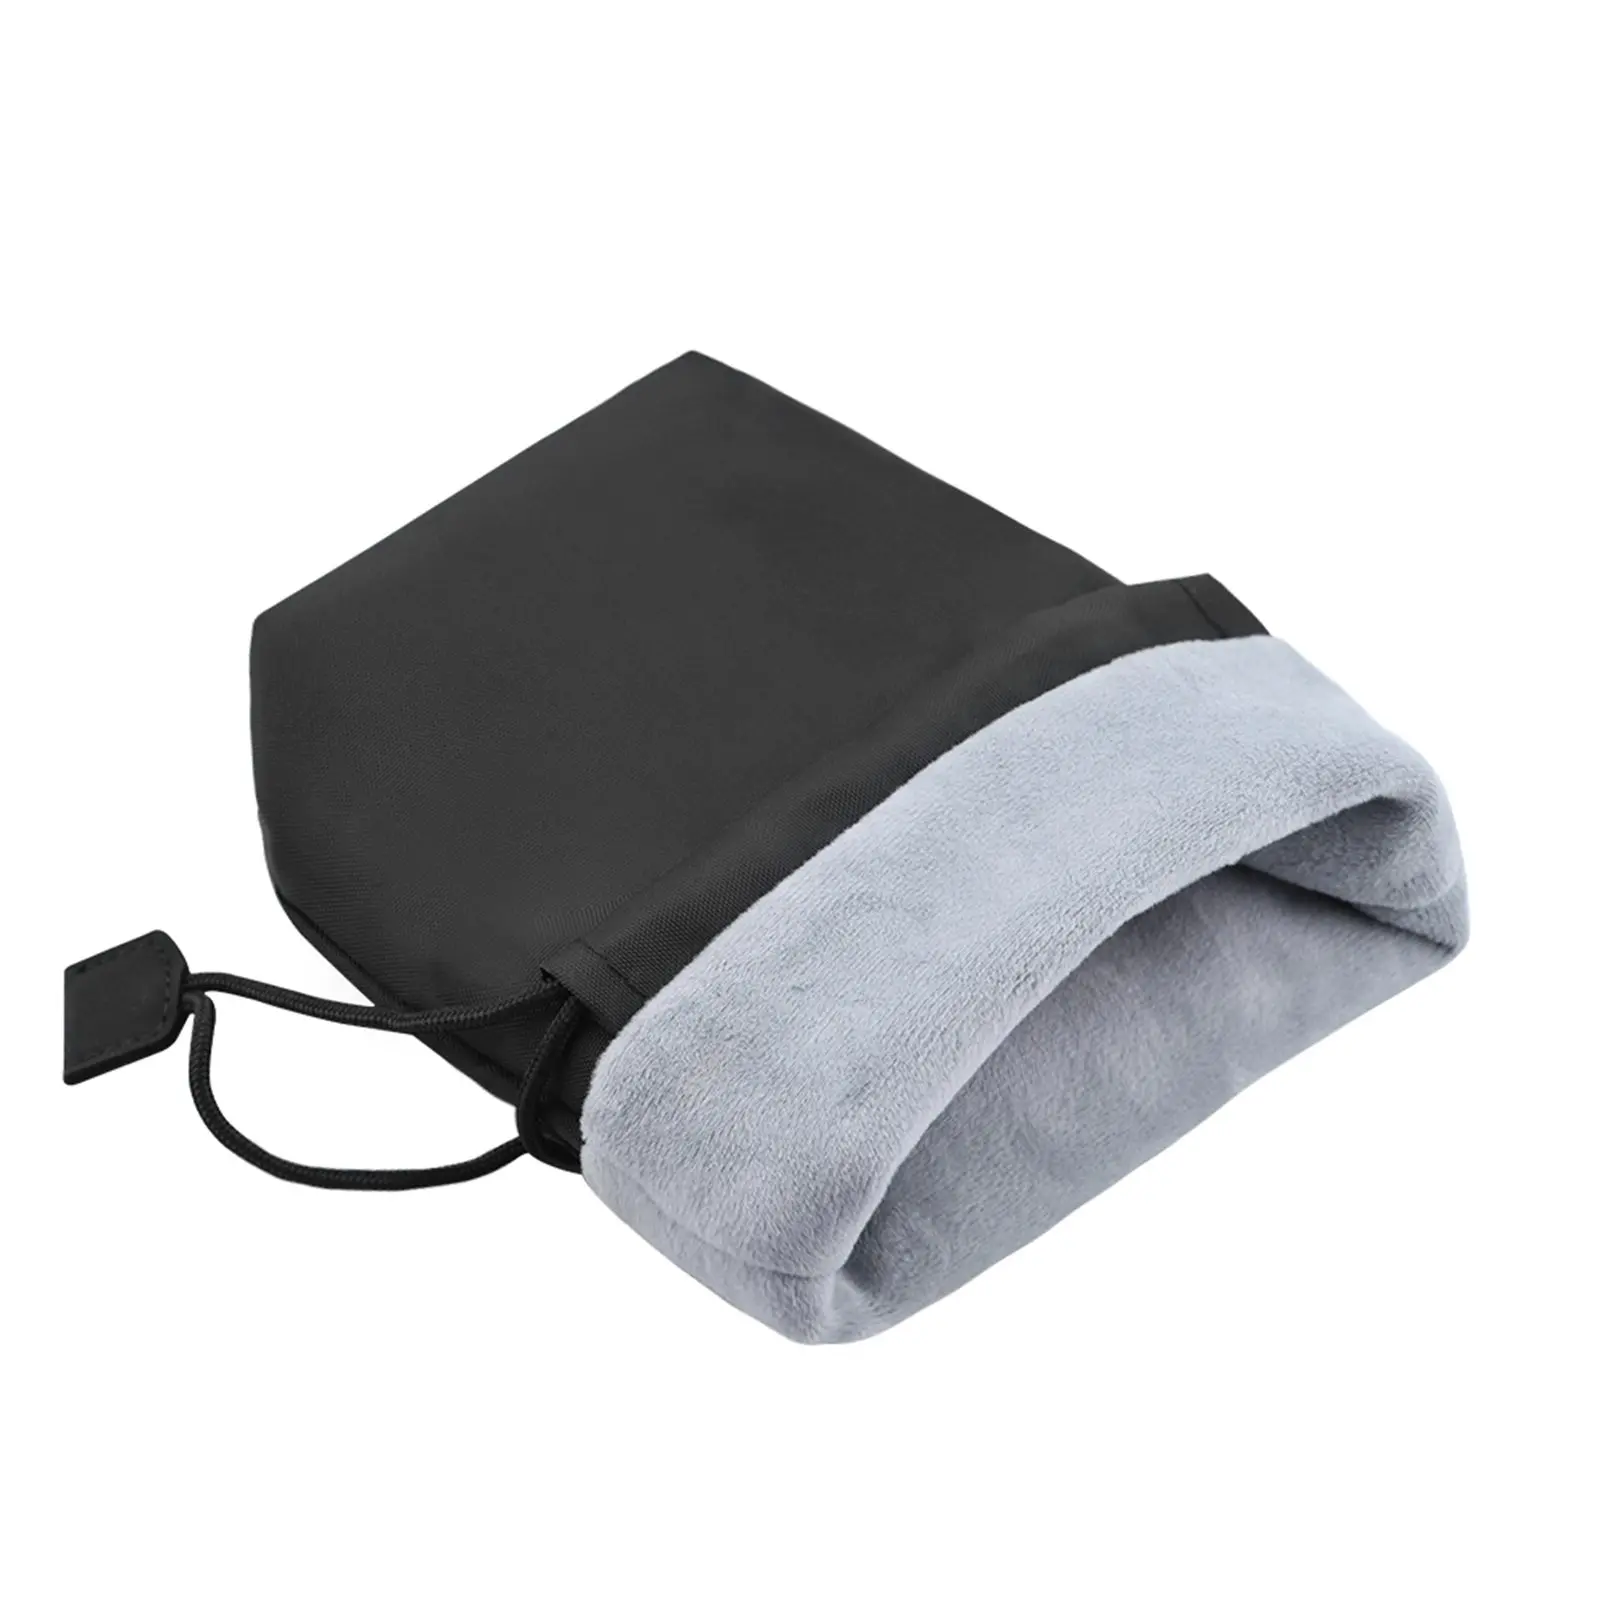 Reusable Portable Storage Bag, Pouch Drawstring Soft, for DJI Mavic Mini 1 / 2 / SE, Osmo Mobile 3, RC Drone Accessories Travel